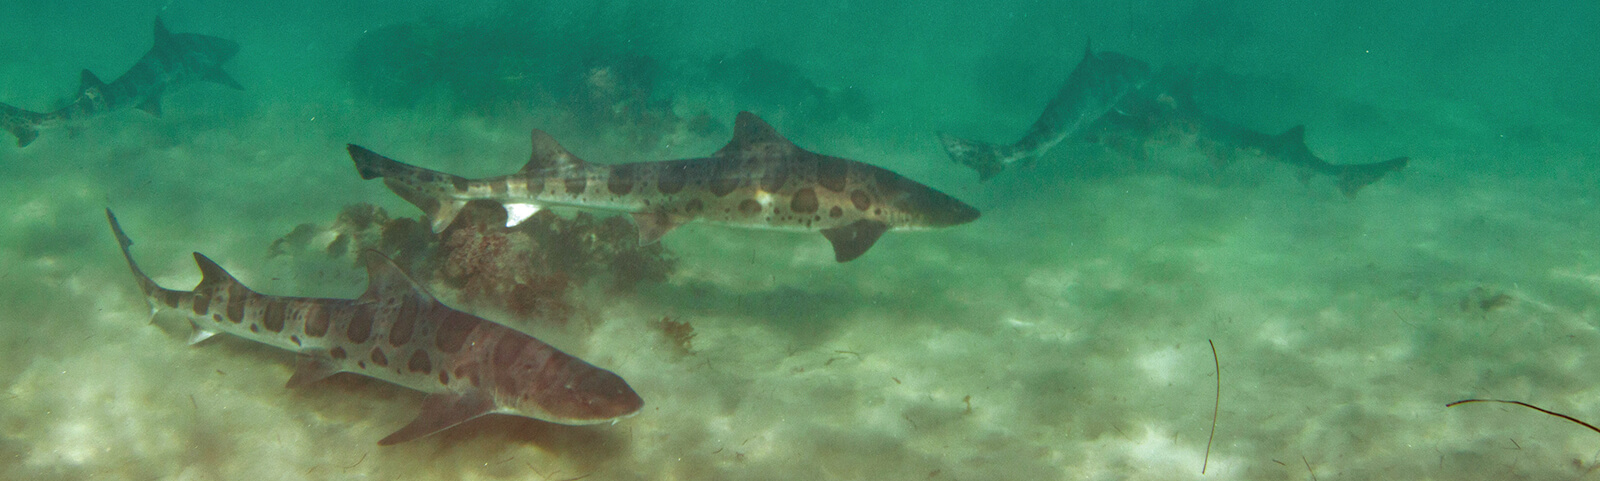 leopard sharks swimming along a sandy seafloor